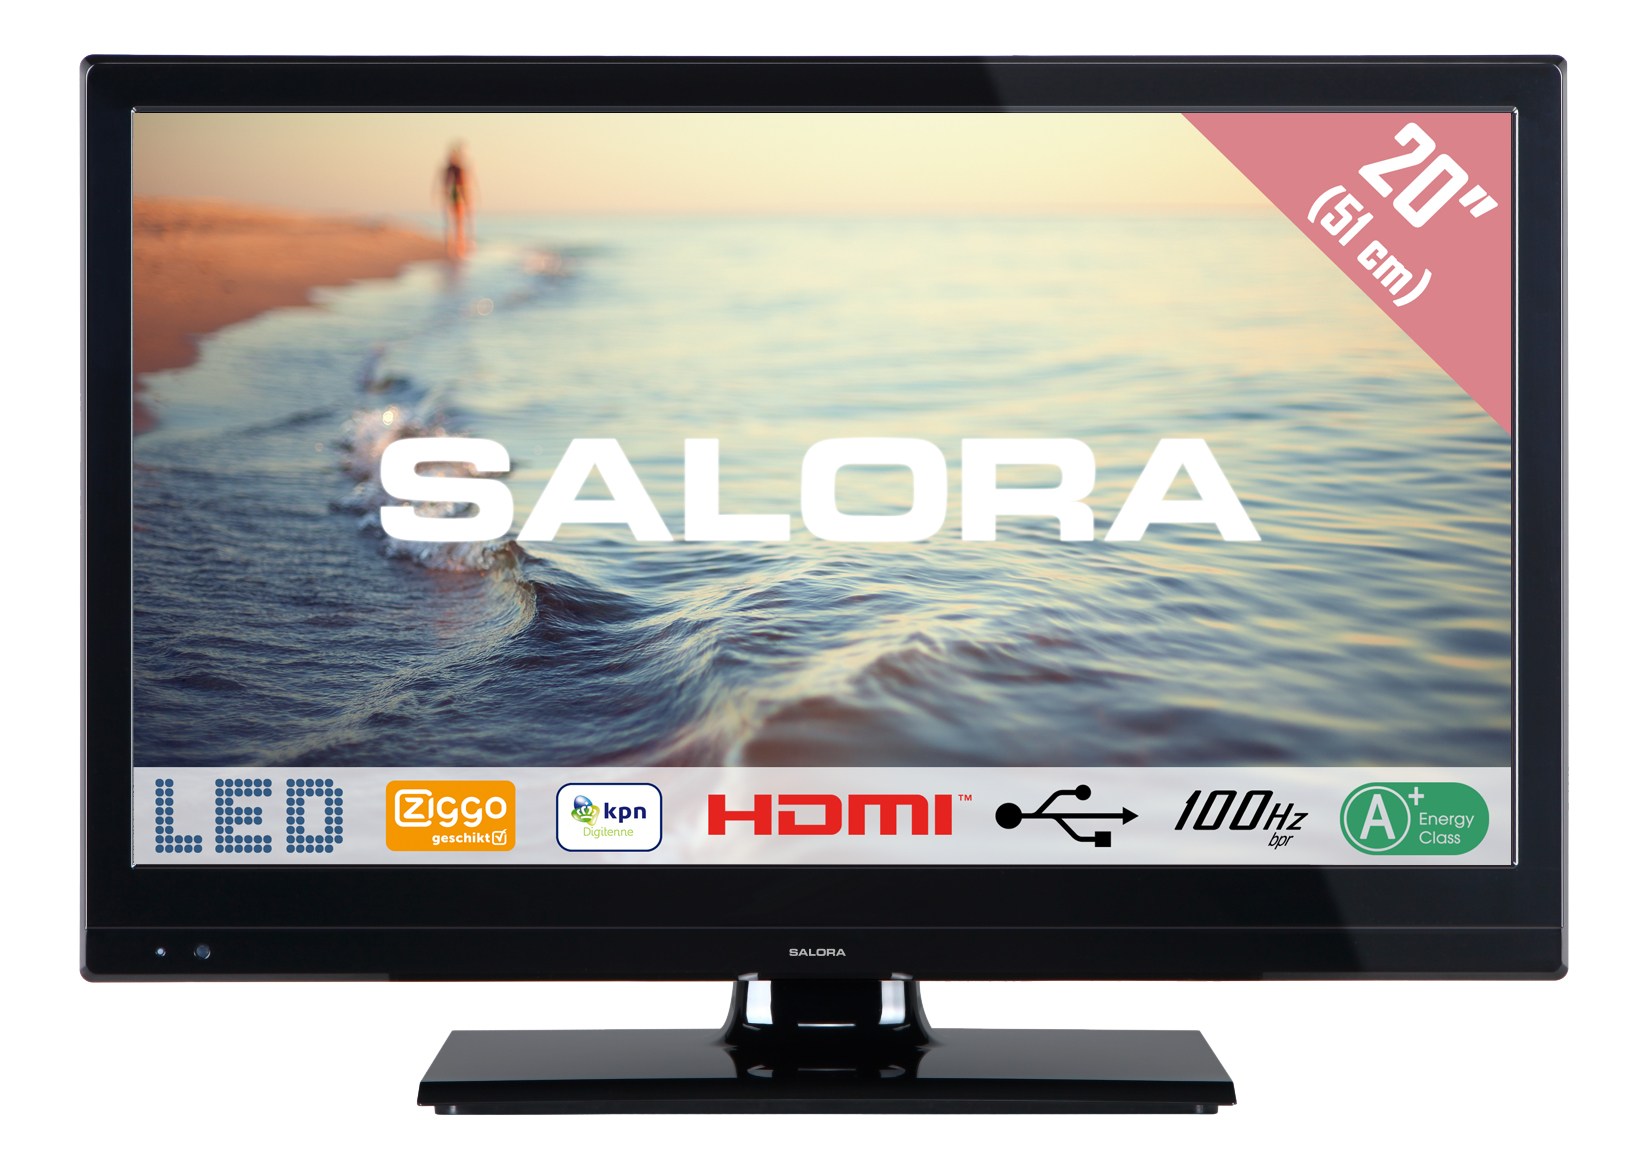 Salora 5000 series 20HLB5000 TV